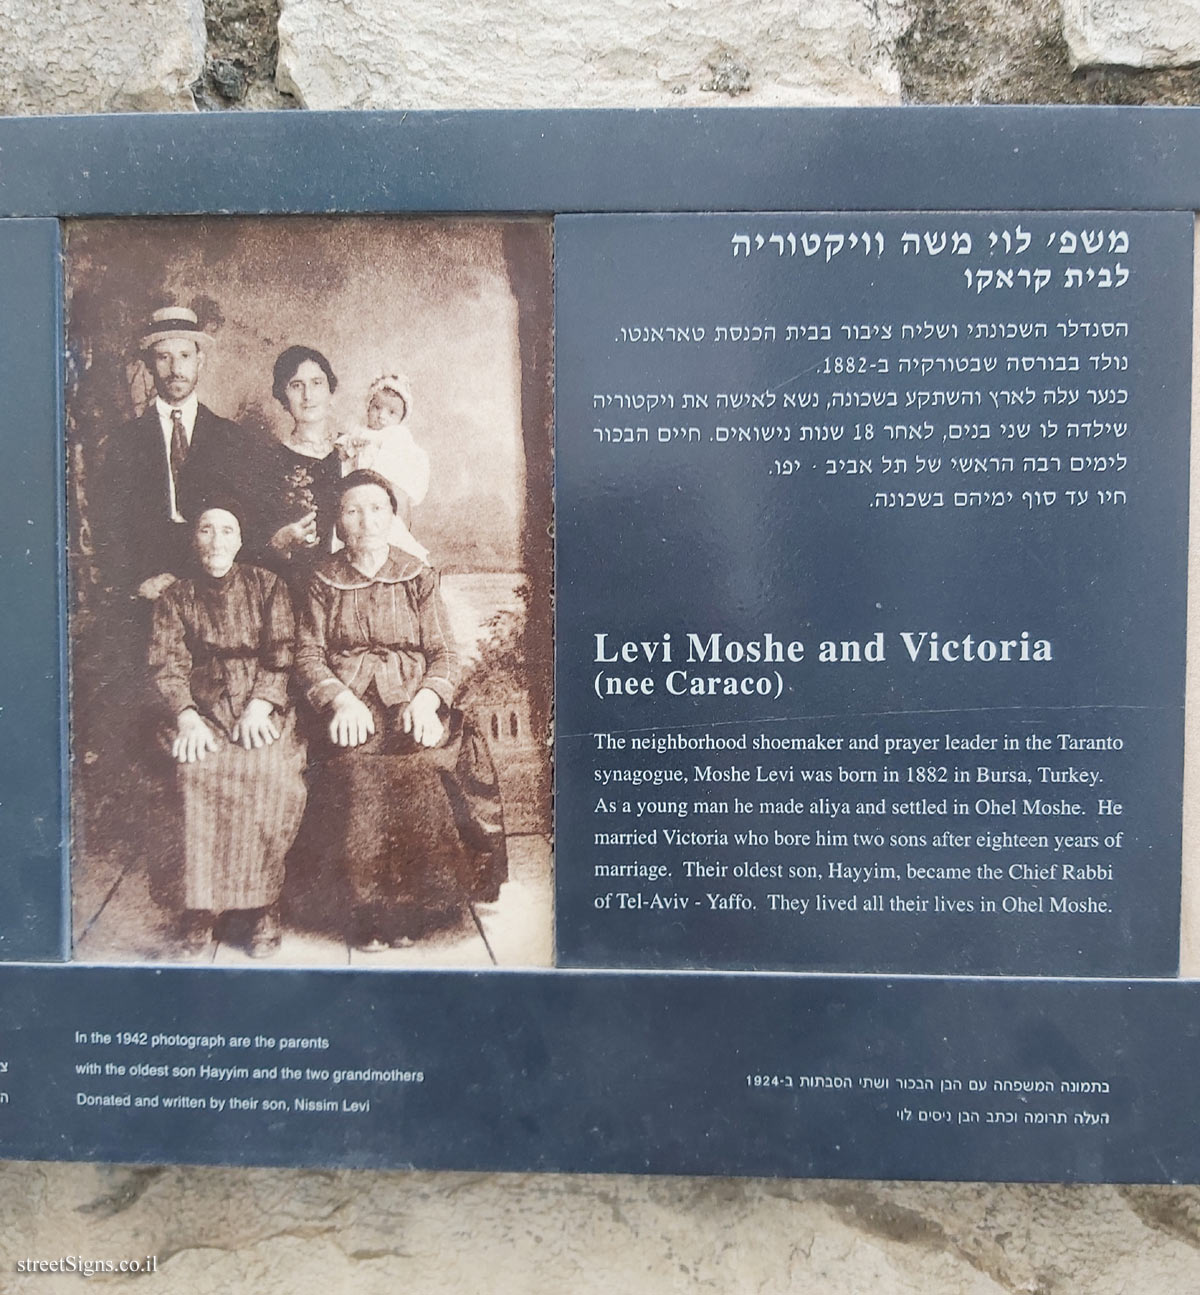 Jerusalem - Photograph in stone - Ohel Moshe - Levi Moshe and Victoria